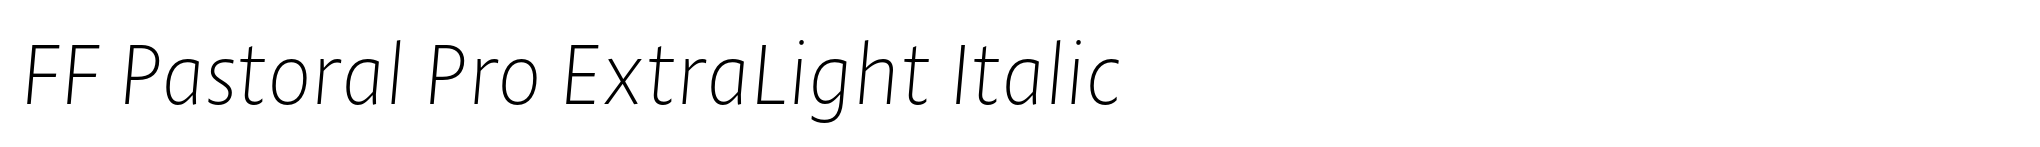 FF Pastoral Pro ExtraLight Italic image